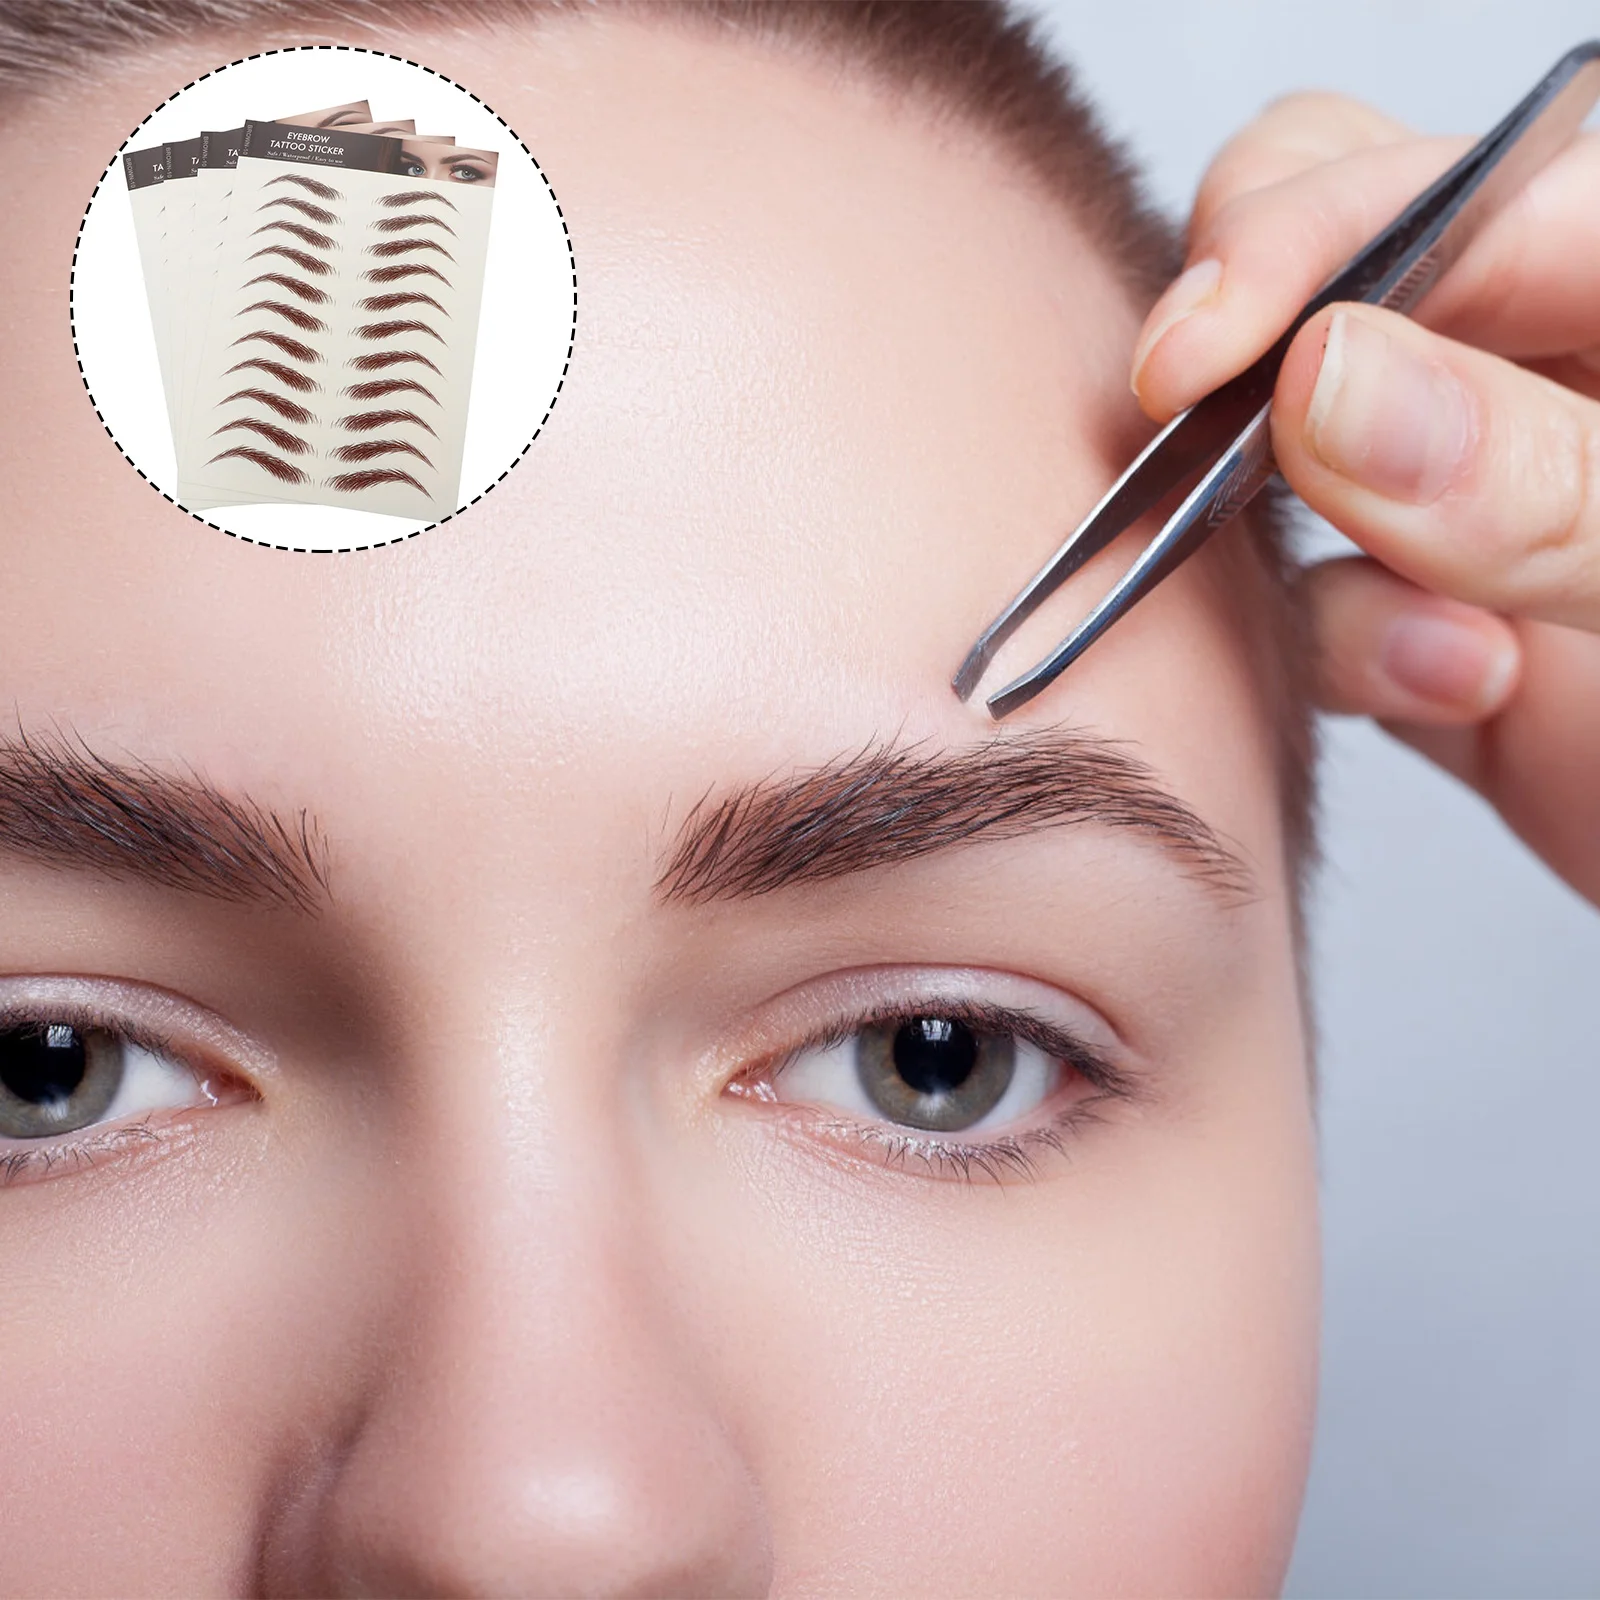 

4 Sheets Waterproof Eyebrow Stickers Tattoos Imitation Trimming False Eyebrows Cosmetics Transfer 6D Hair-Like